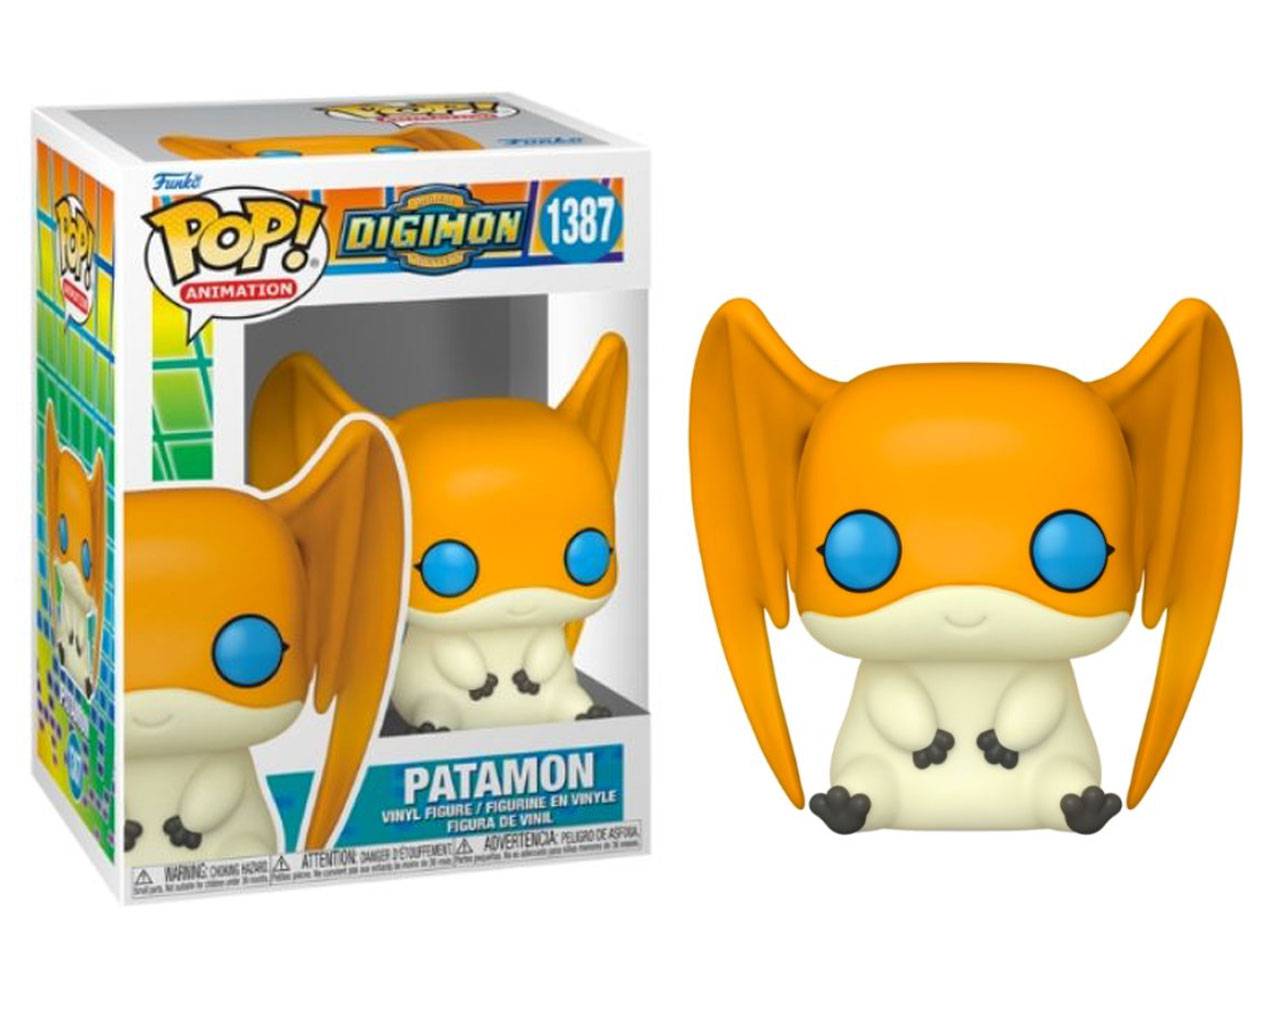 Patamon - Digimon Pop! Vinyl